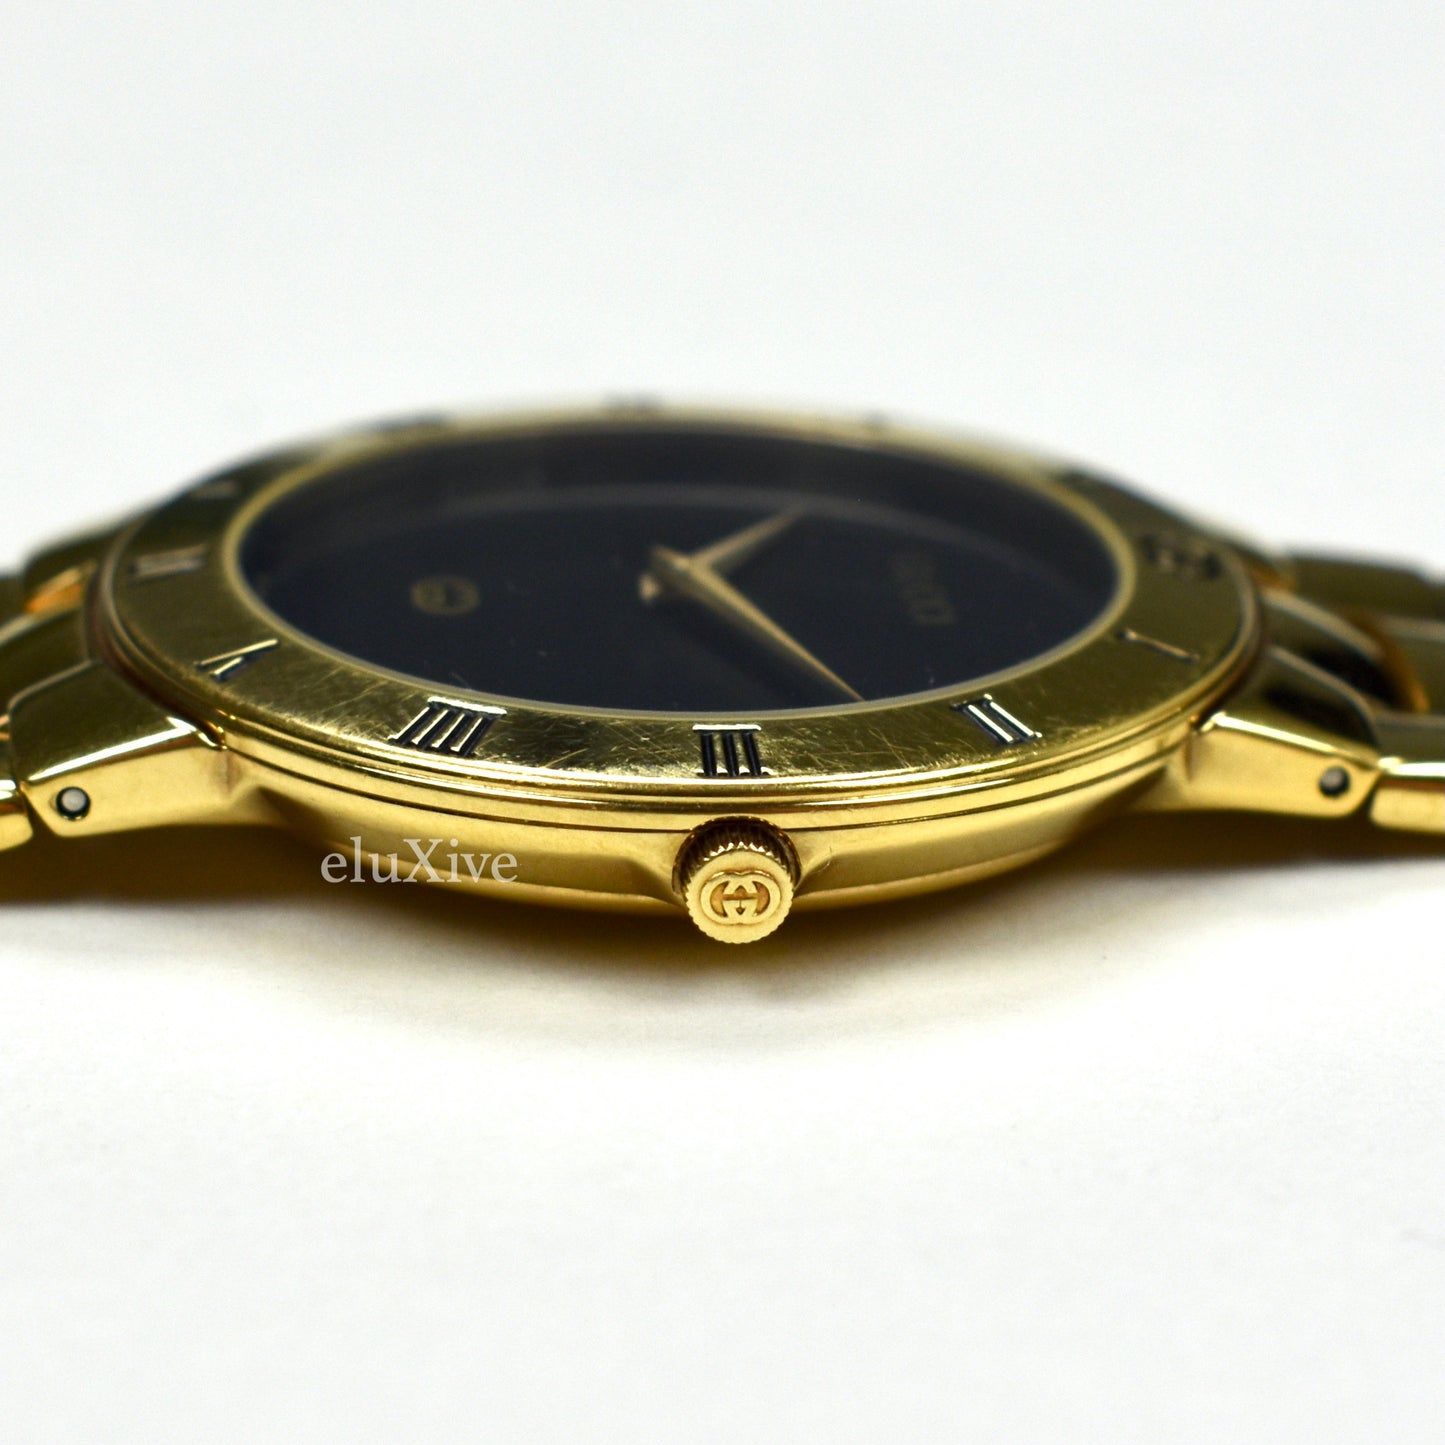 Gucci - 3300M Gold / Black Dial 'Pulp Fiction' Watch